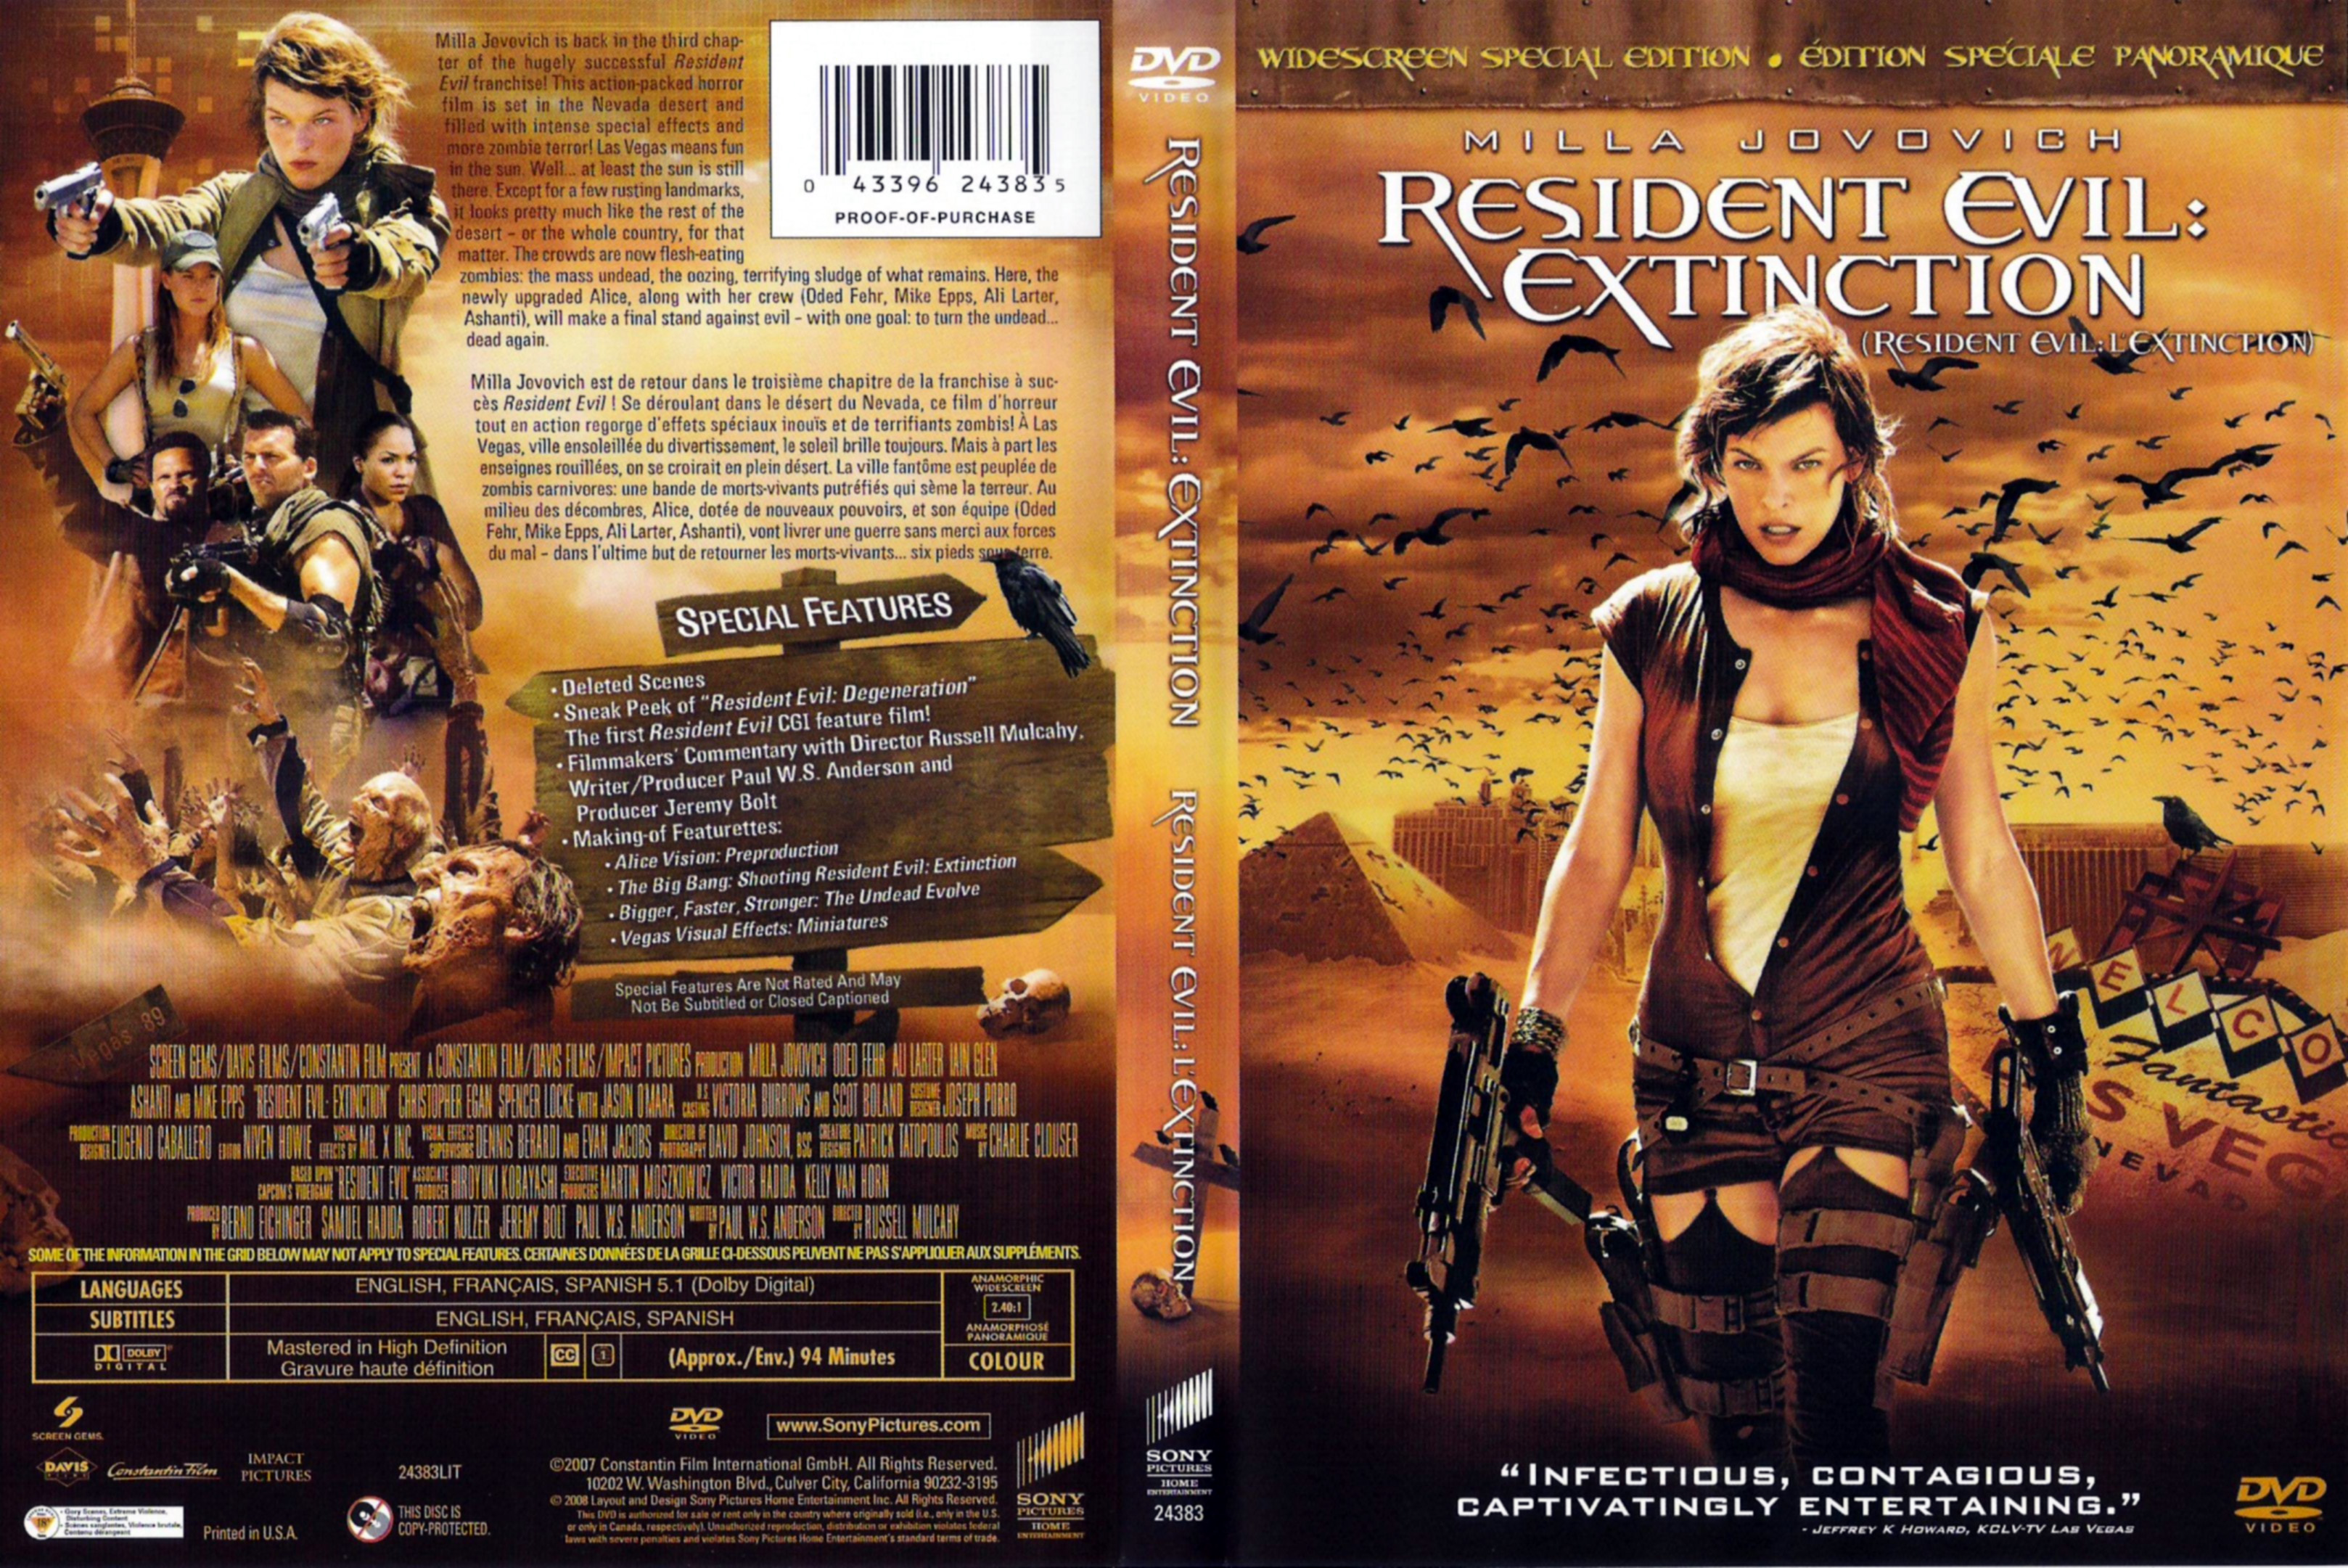 Jaquette DVD Resident evil extinction Zone 1